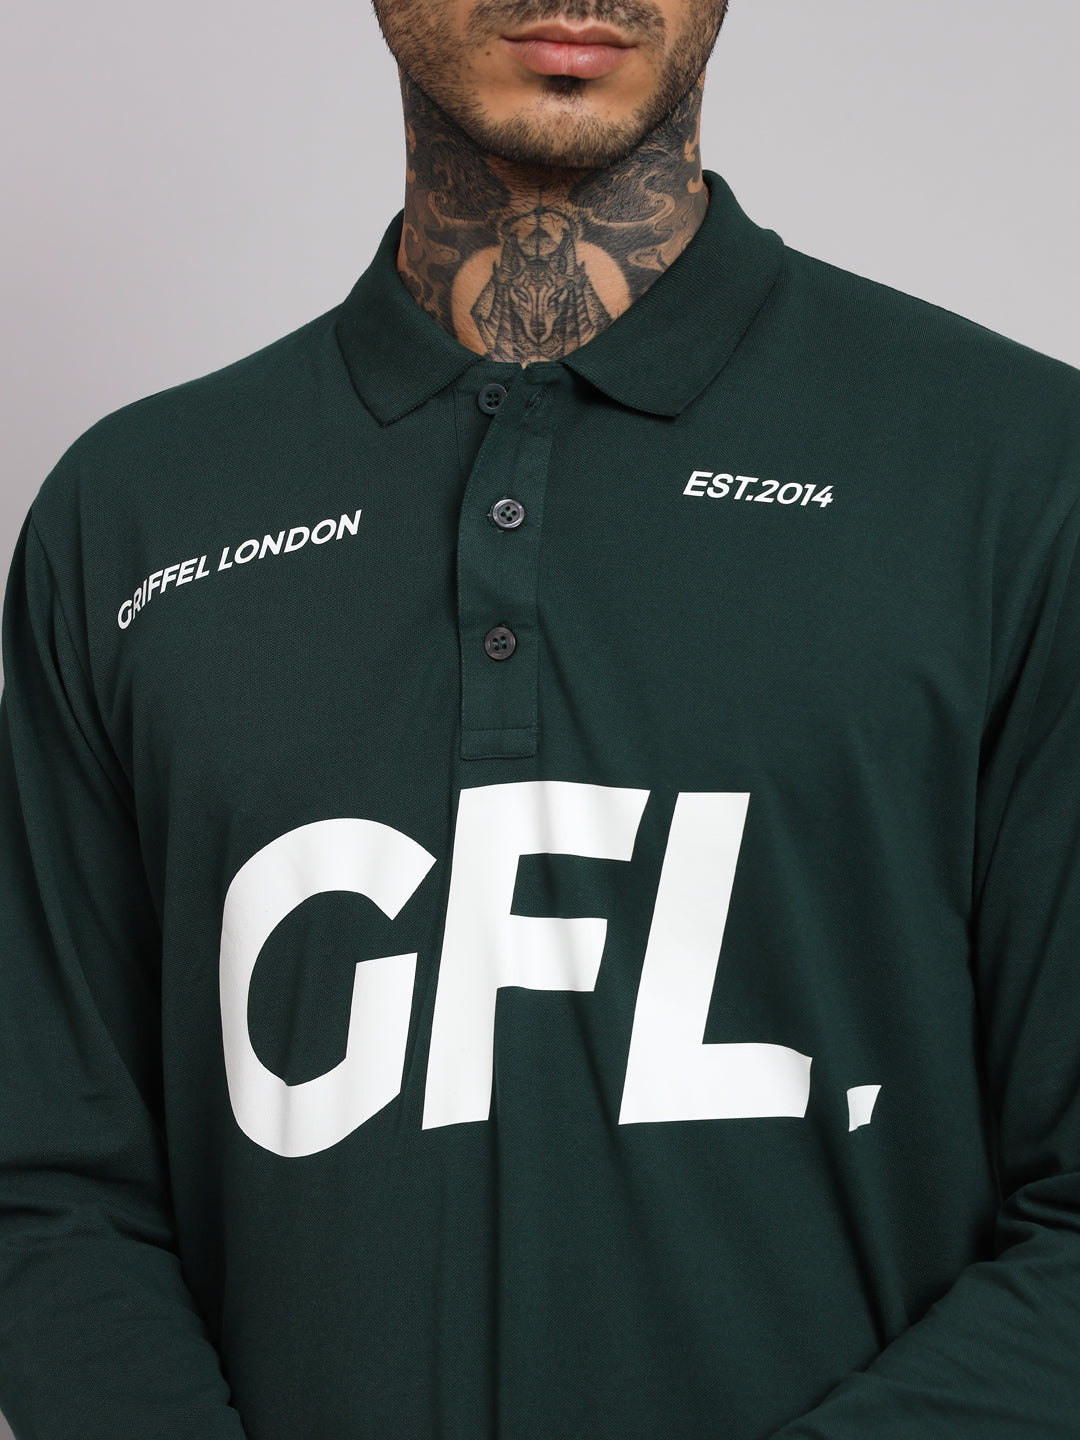 GRIFFEL Men's Green GFL Printed Cotton Full Sleeve Polo T-shirt - griffel